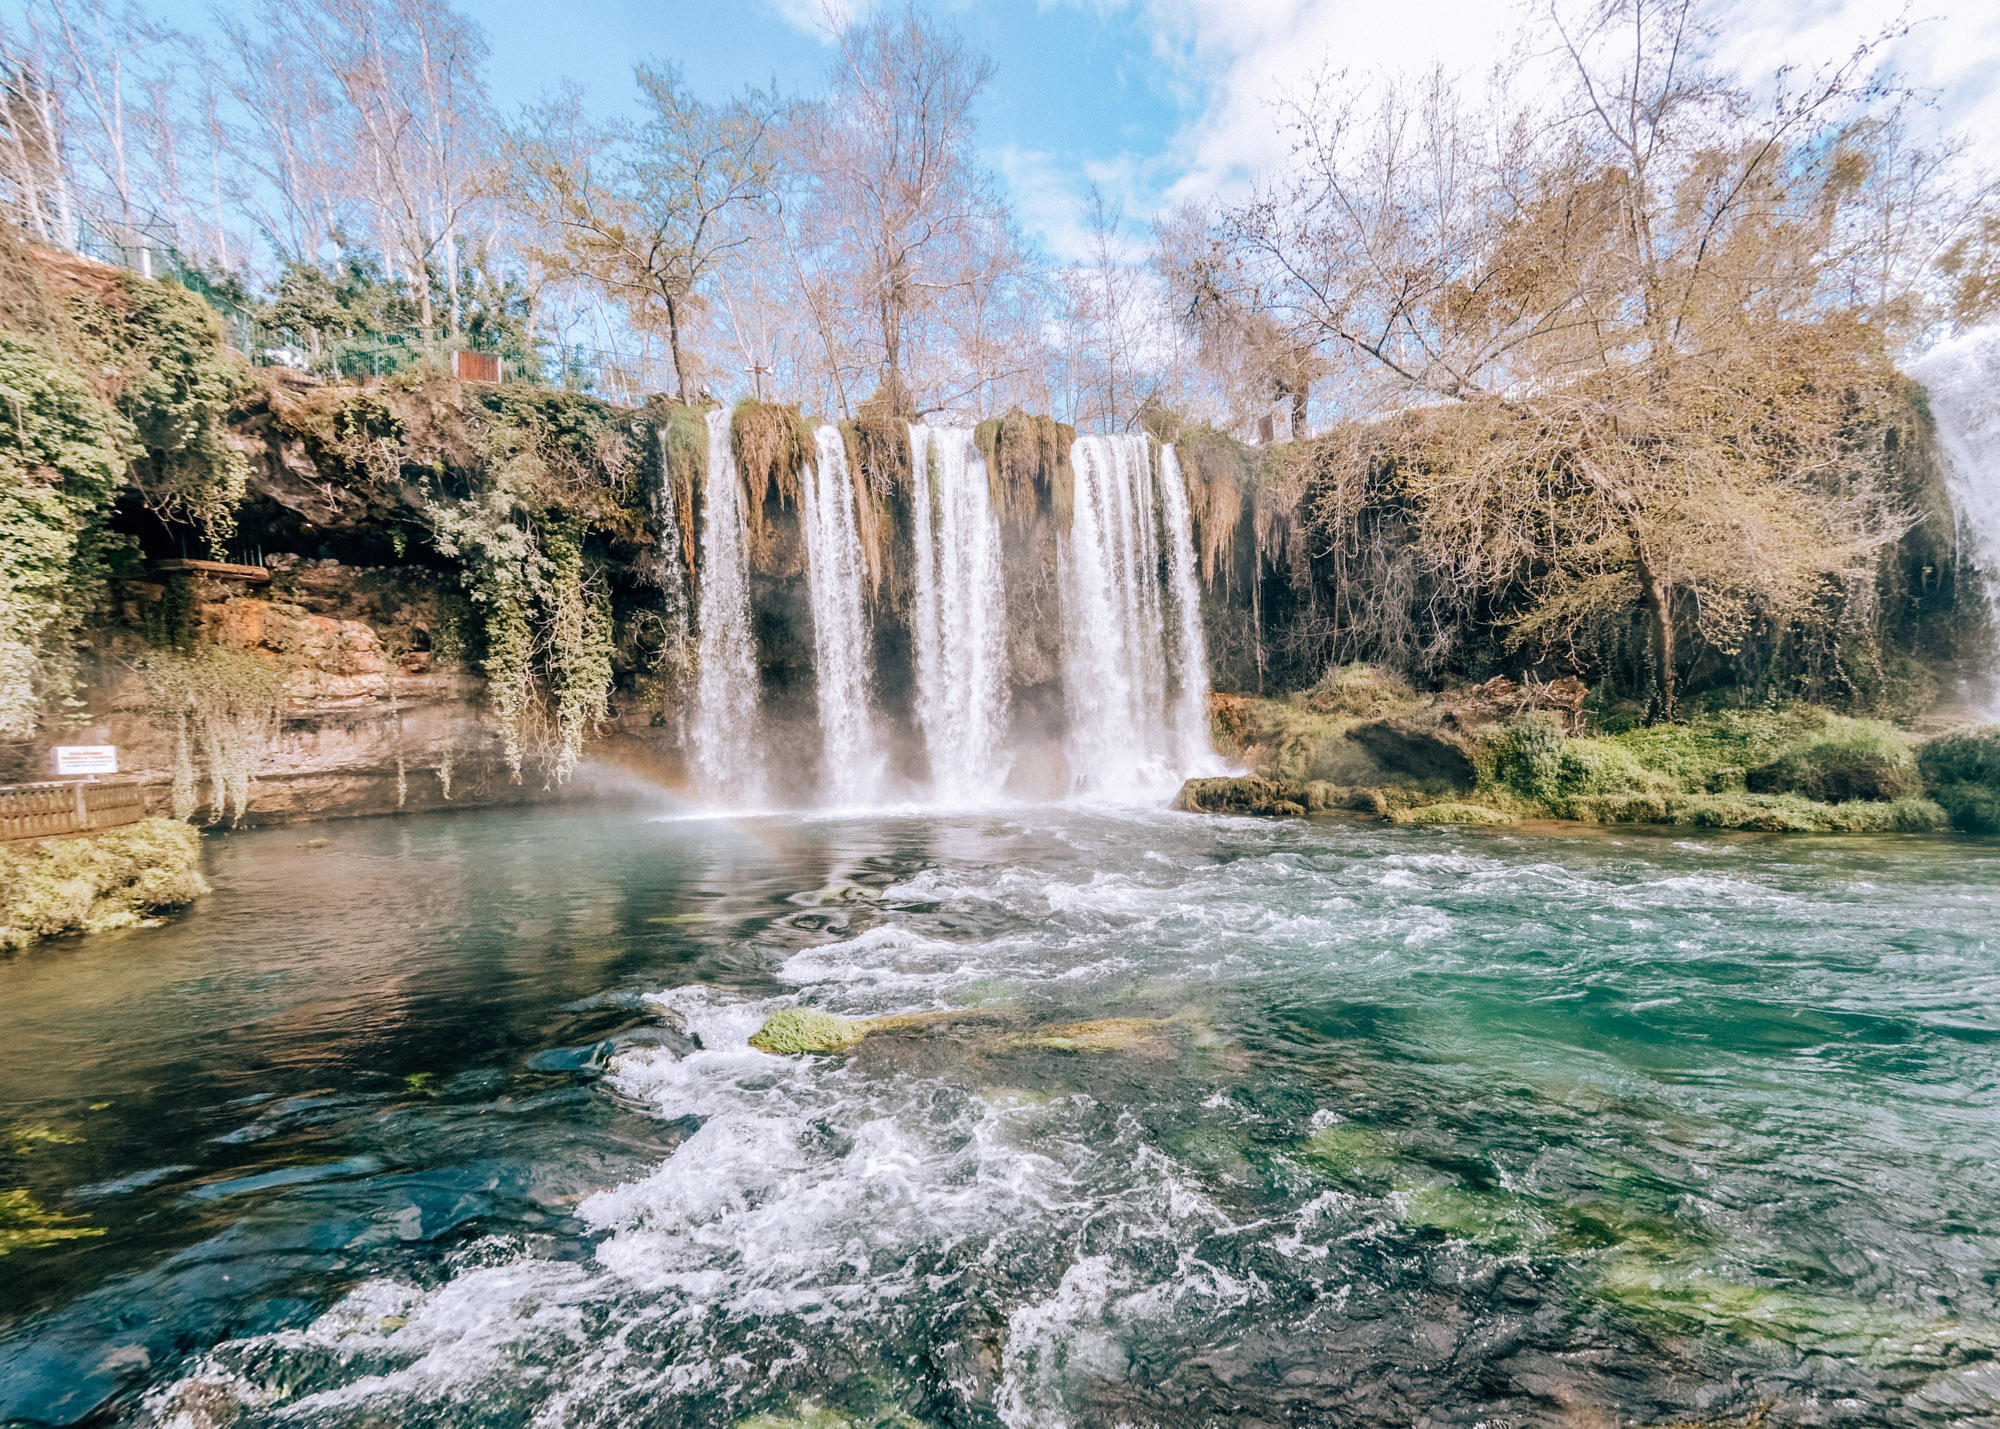 Duden Waterfalls in Antalya - Izkiz